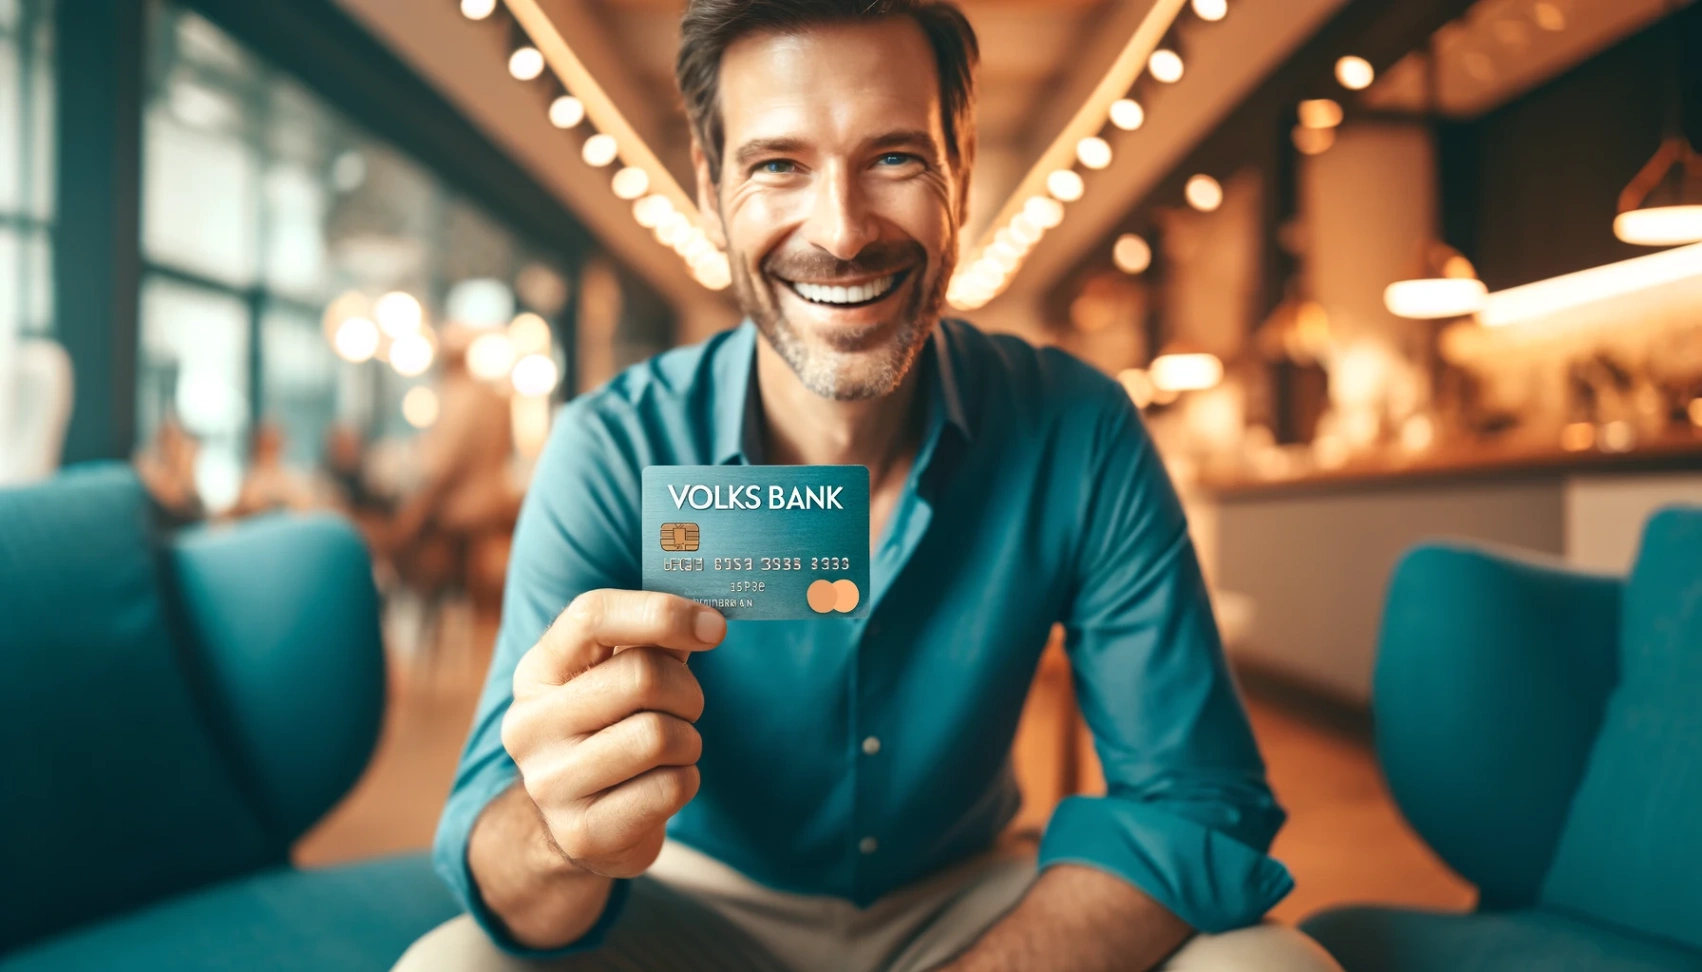 Volksbank Raiffeisenbank Gold Card: Step-by-Step Online Application Guide